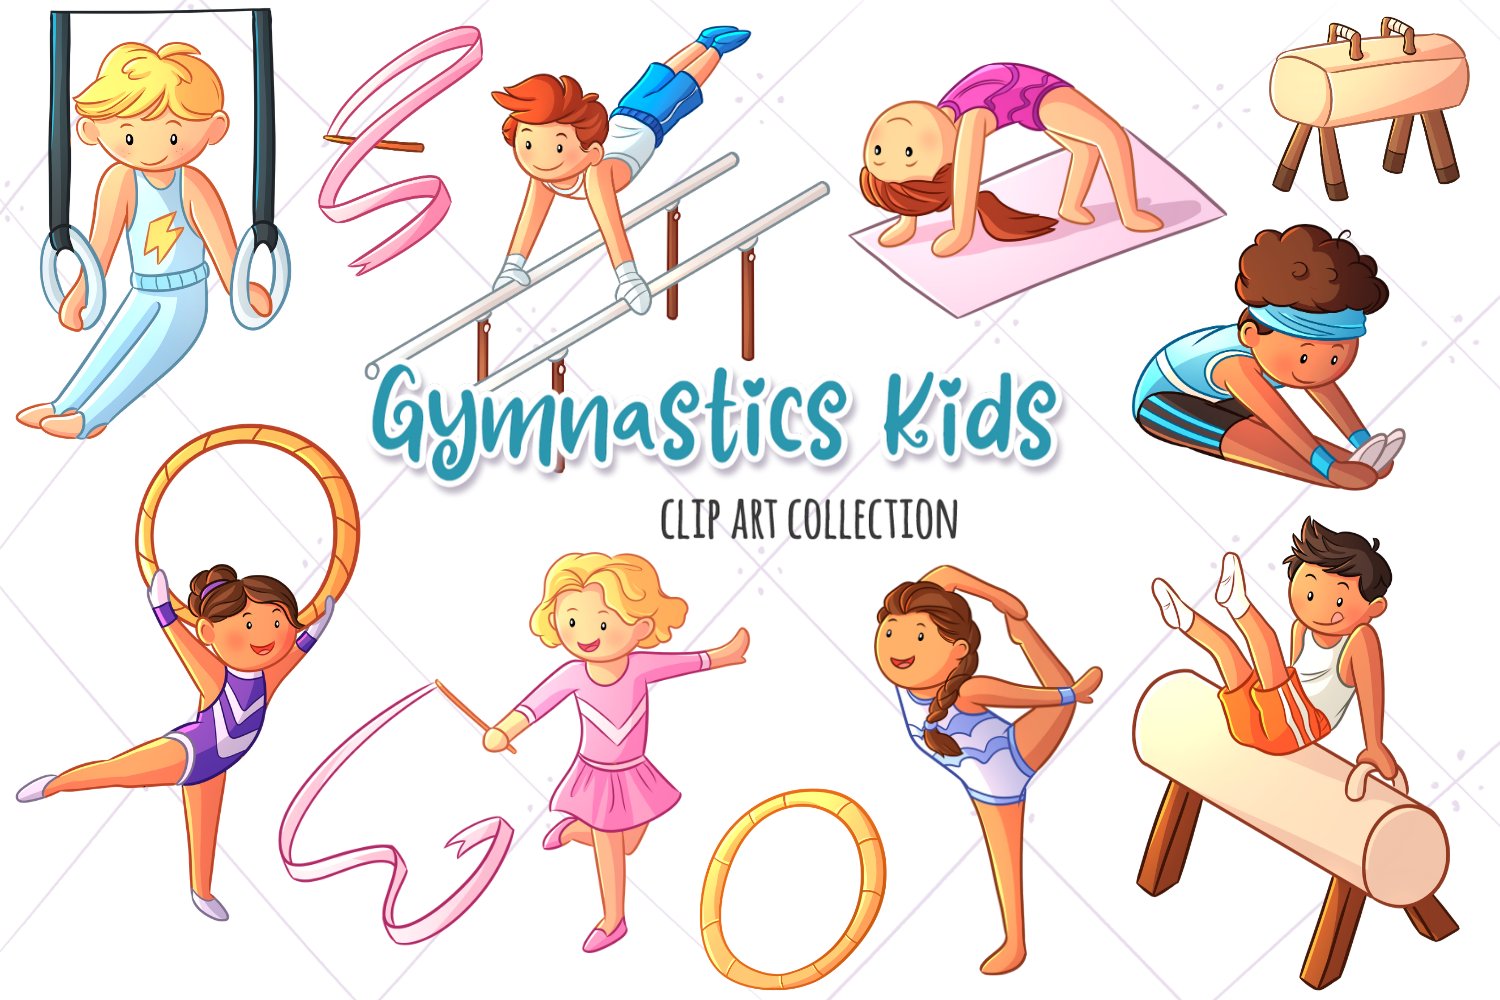 Gymnastics Kids Clip Art Collection cover image.